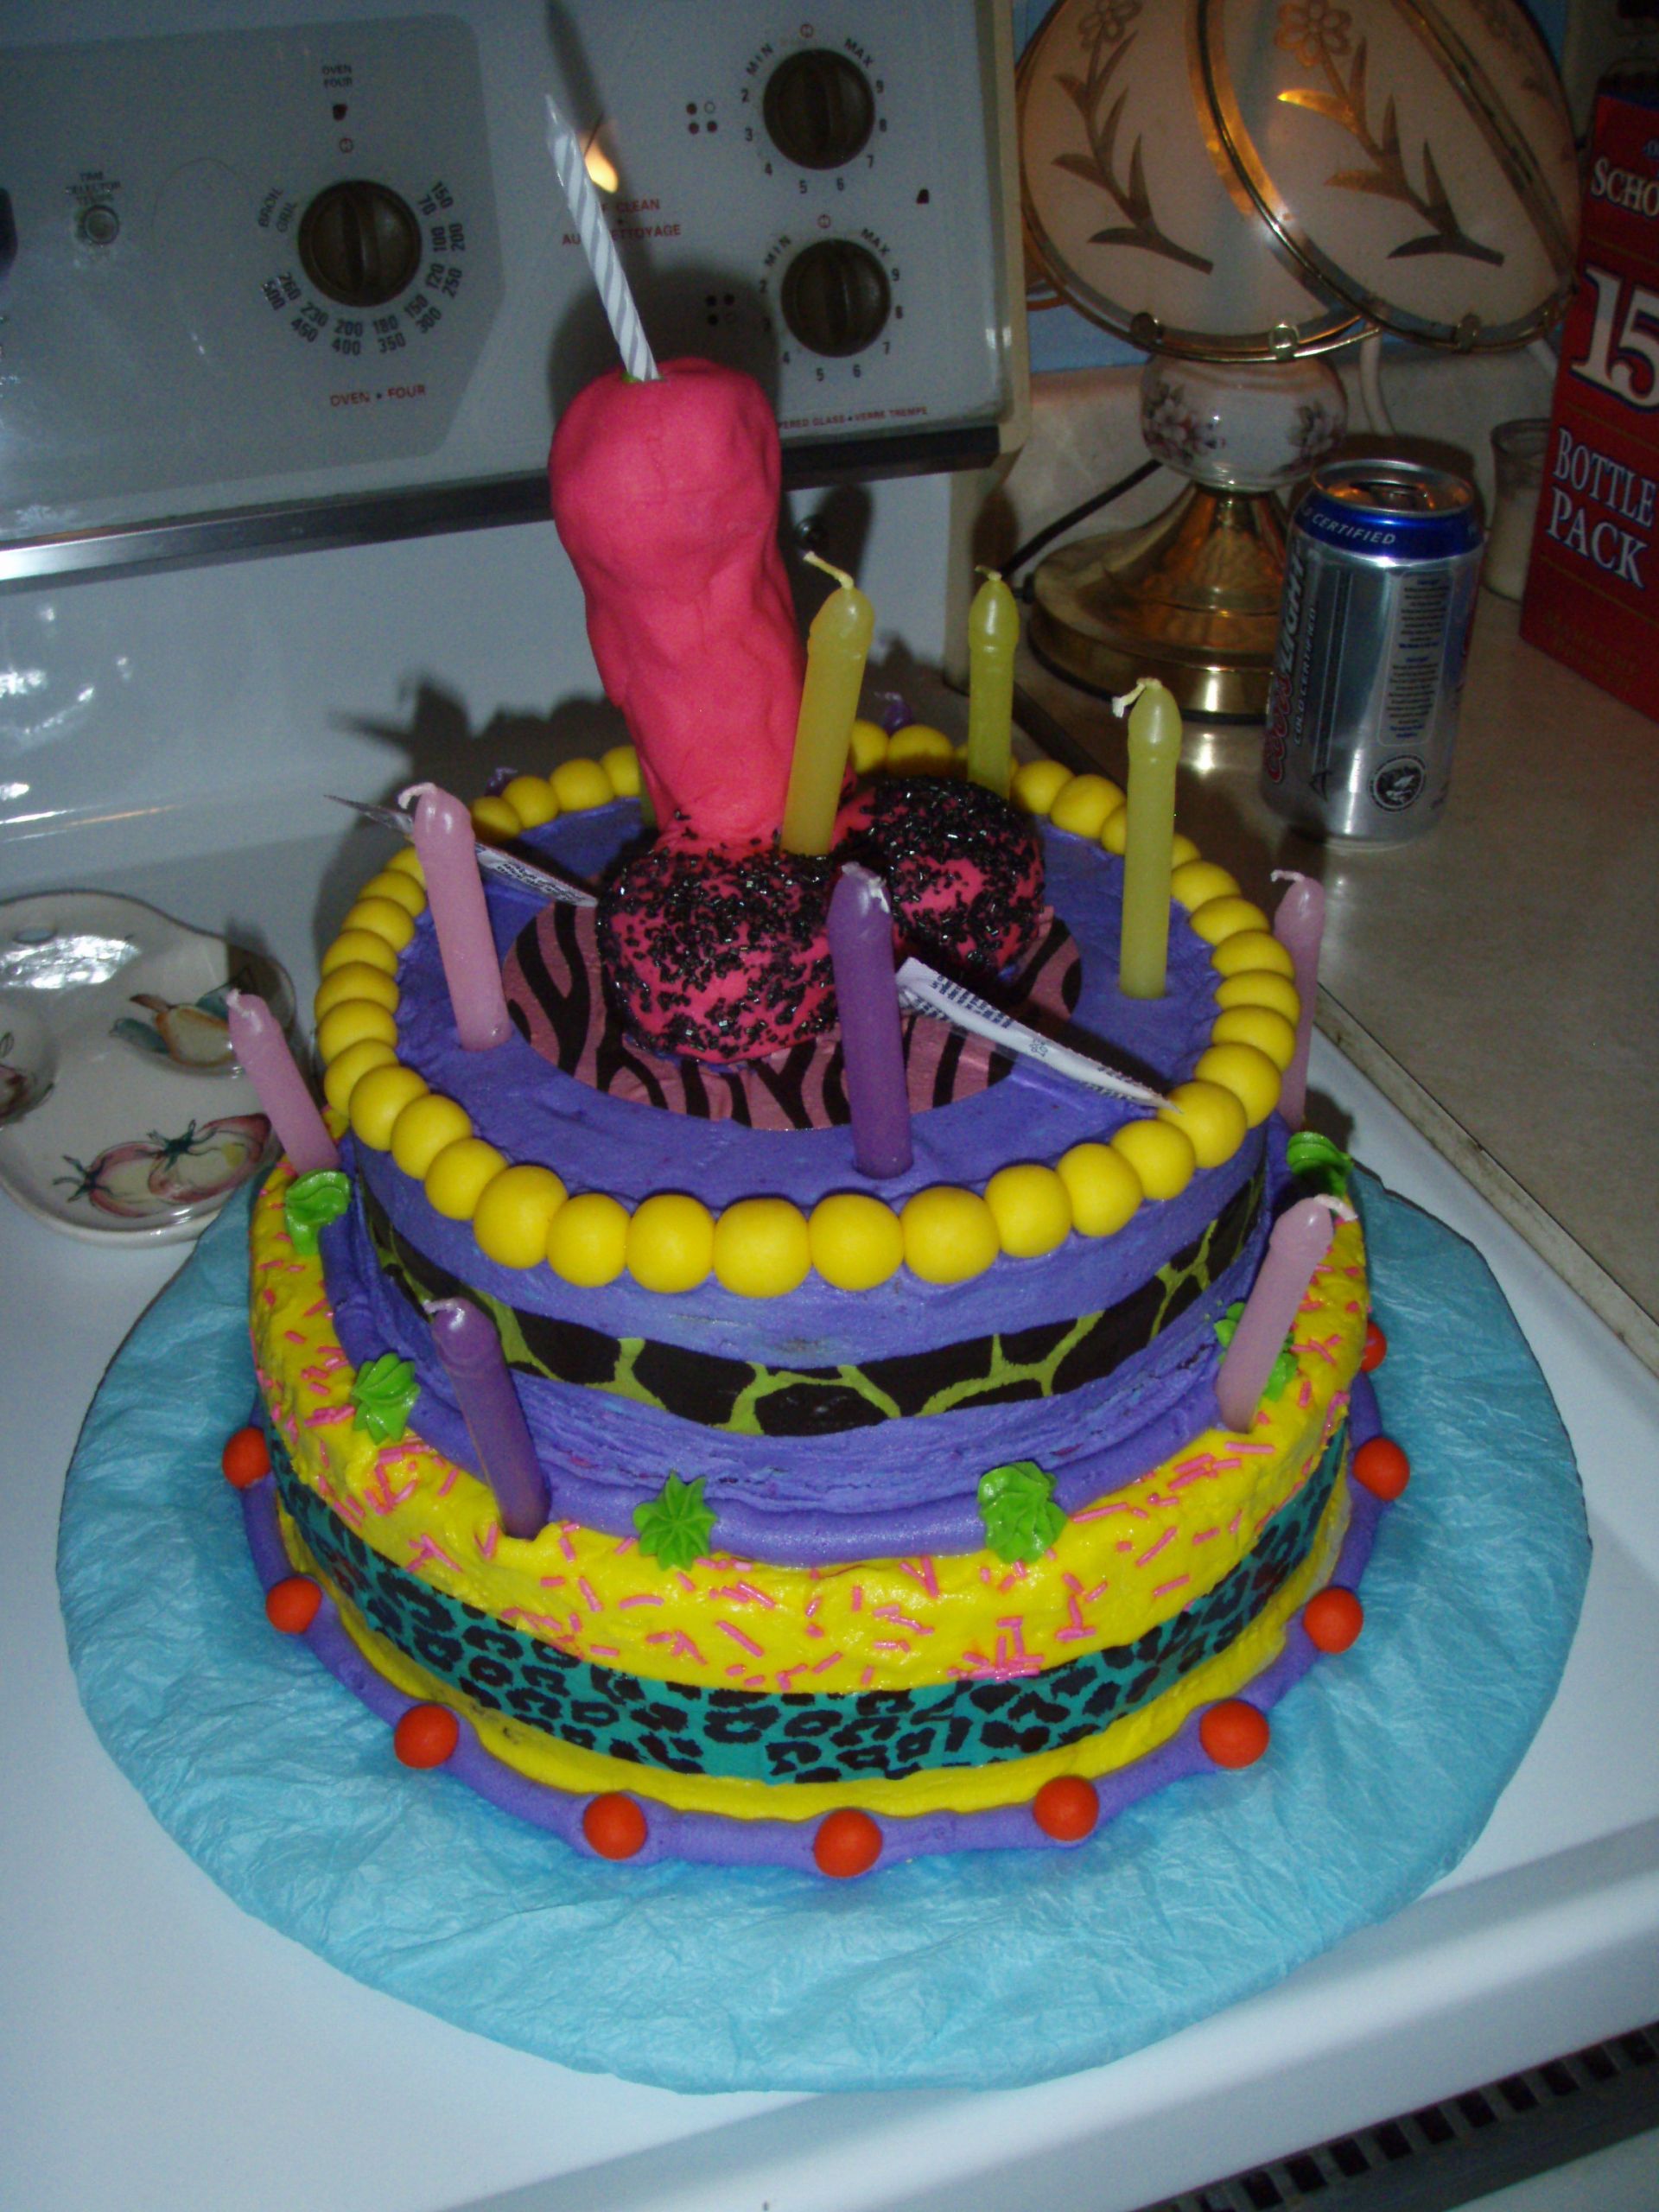 Happy Birthday Dick Cake
 A Penis Birthday Cake